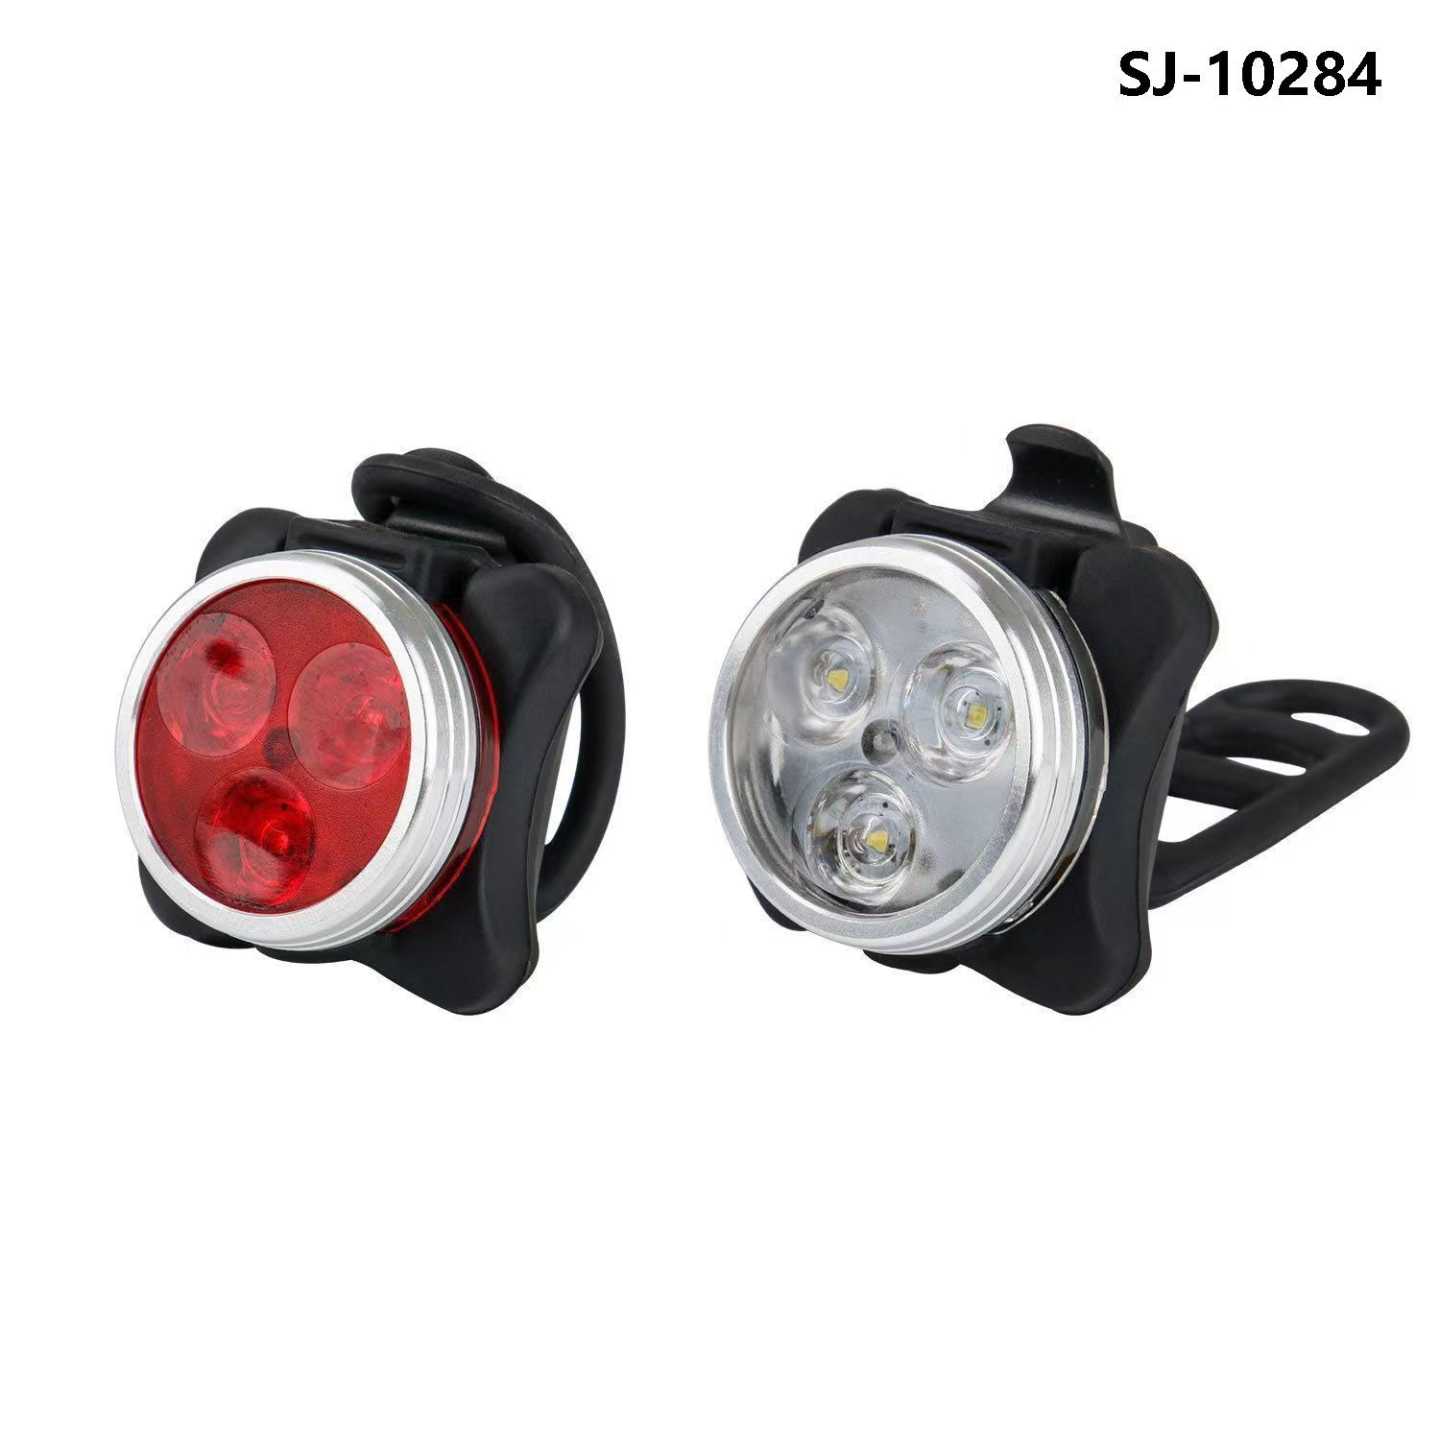 Bicycle headlight - SJ-10284 - 650035